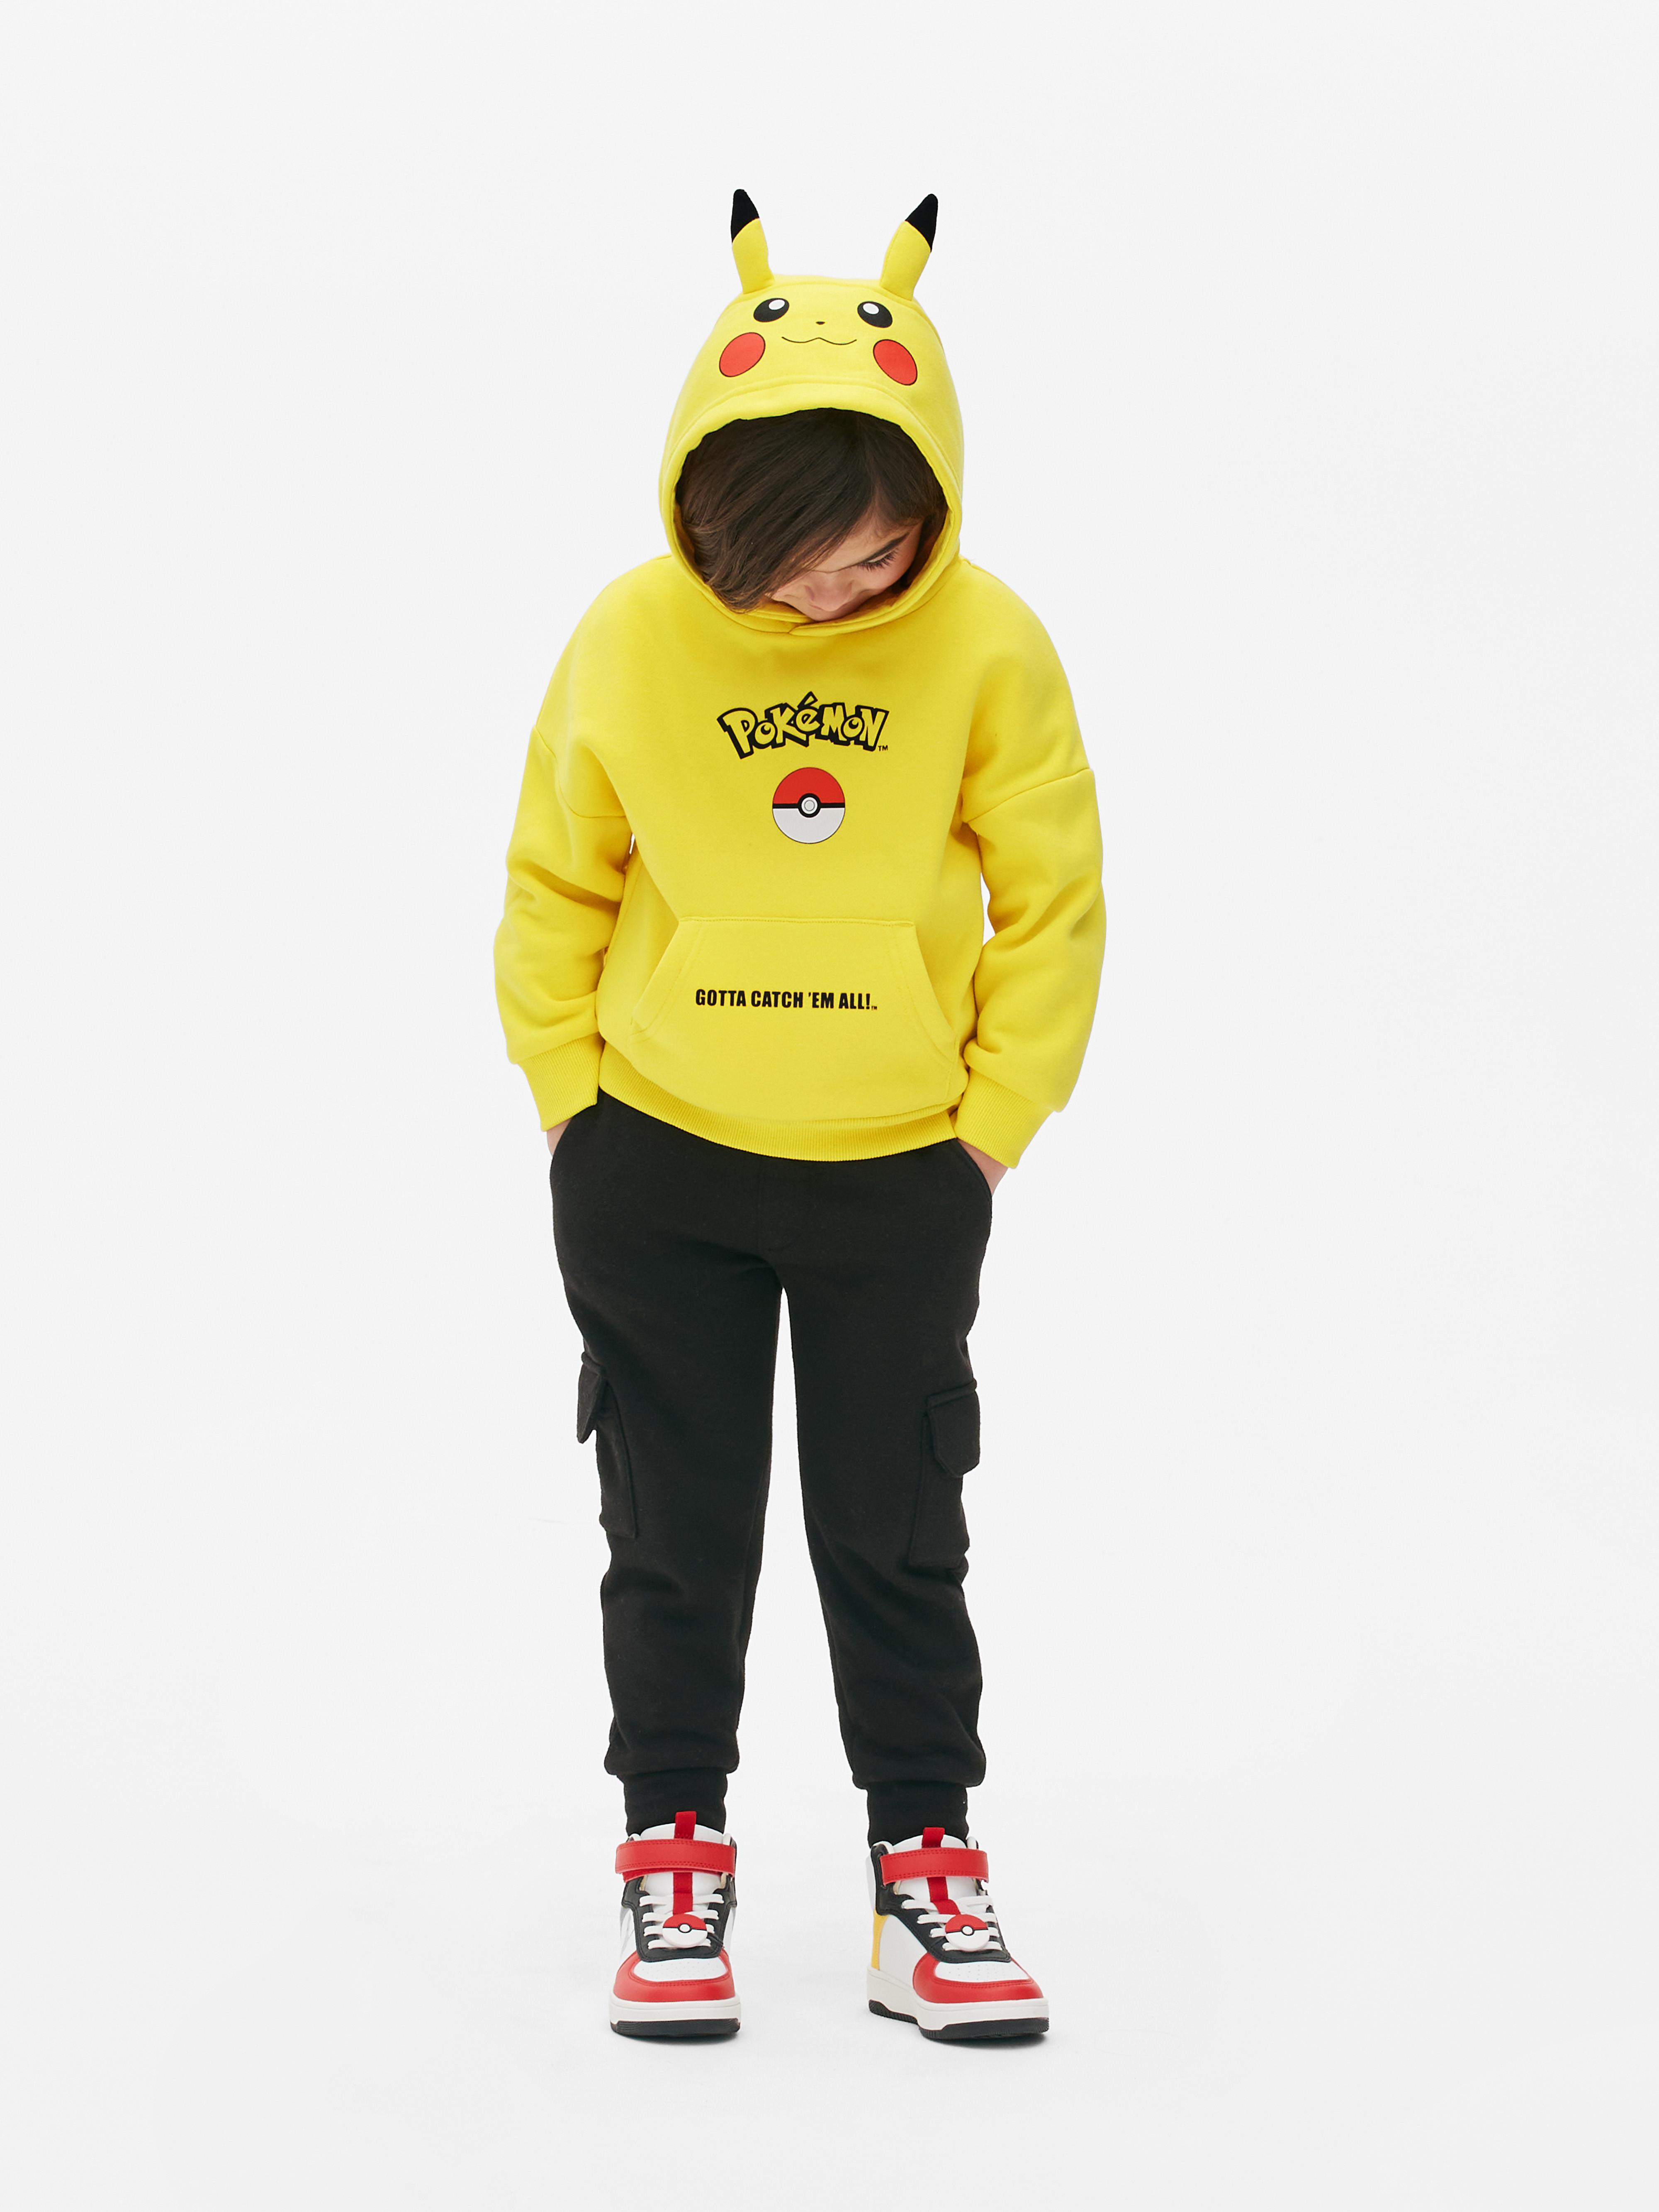 „Pokémon Pikachu“ Hoodie